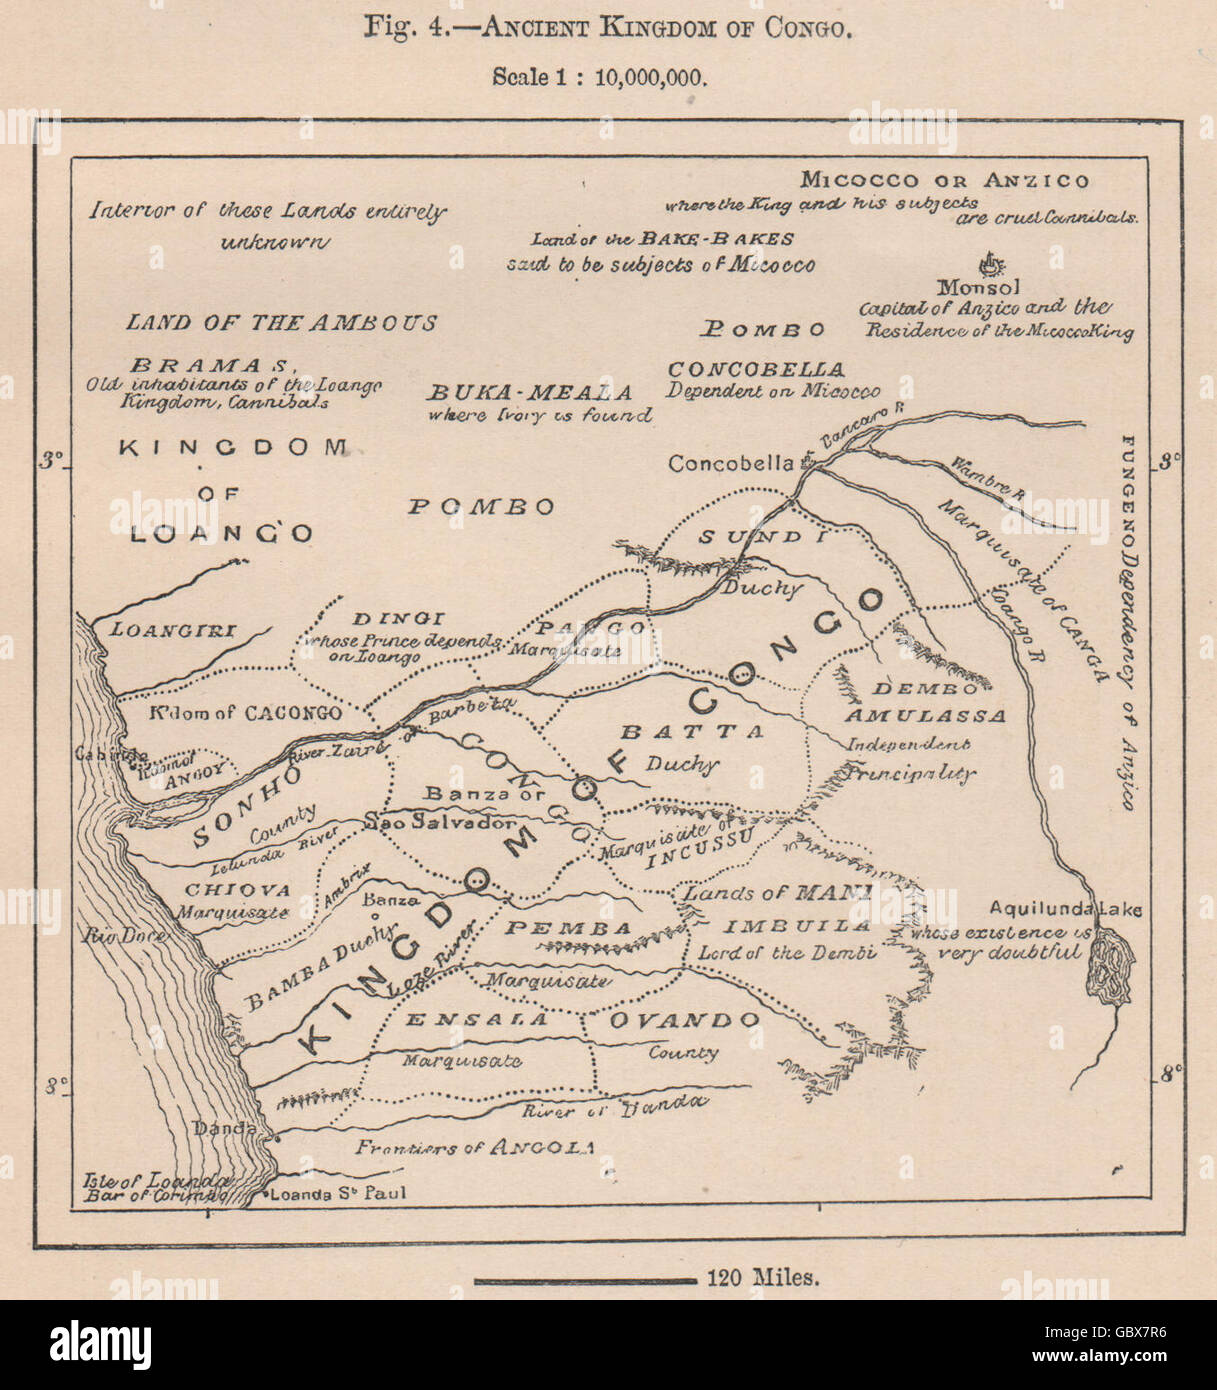 Ancient Kingdom of Kongo. Congo. Africa. Angola, 1885 antique map Stock Photo